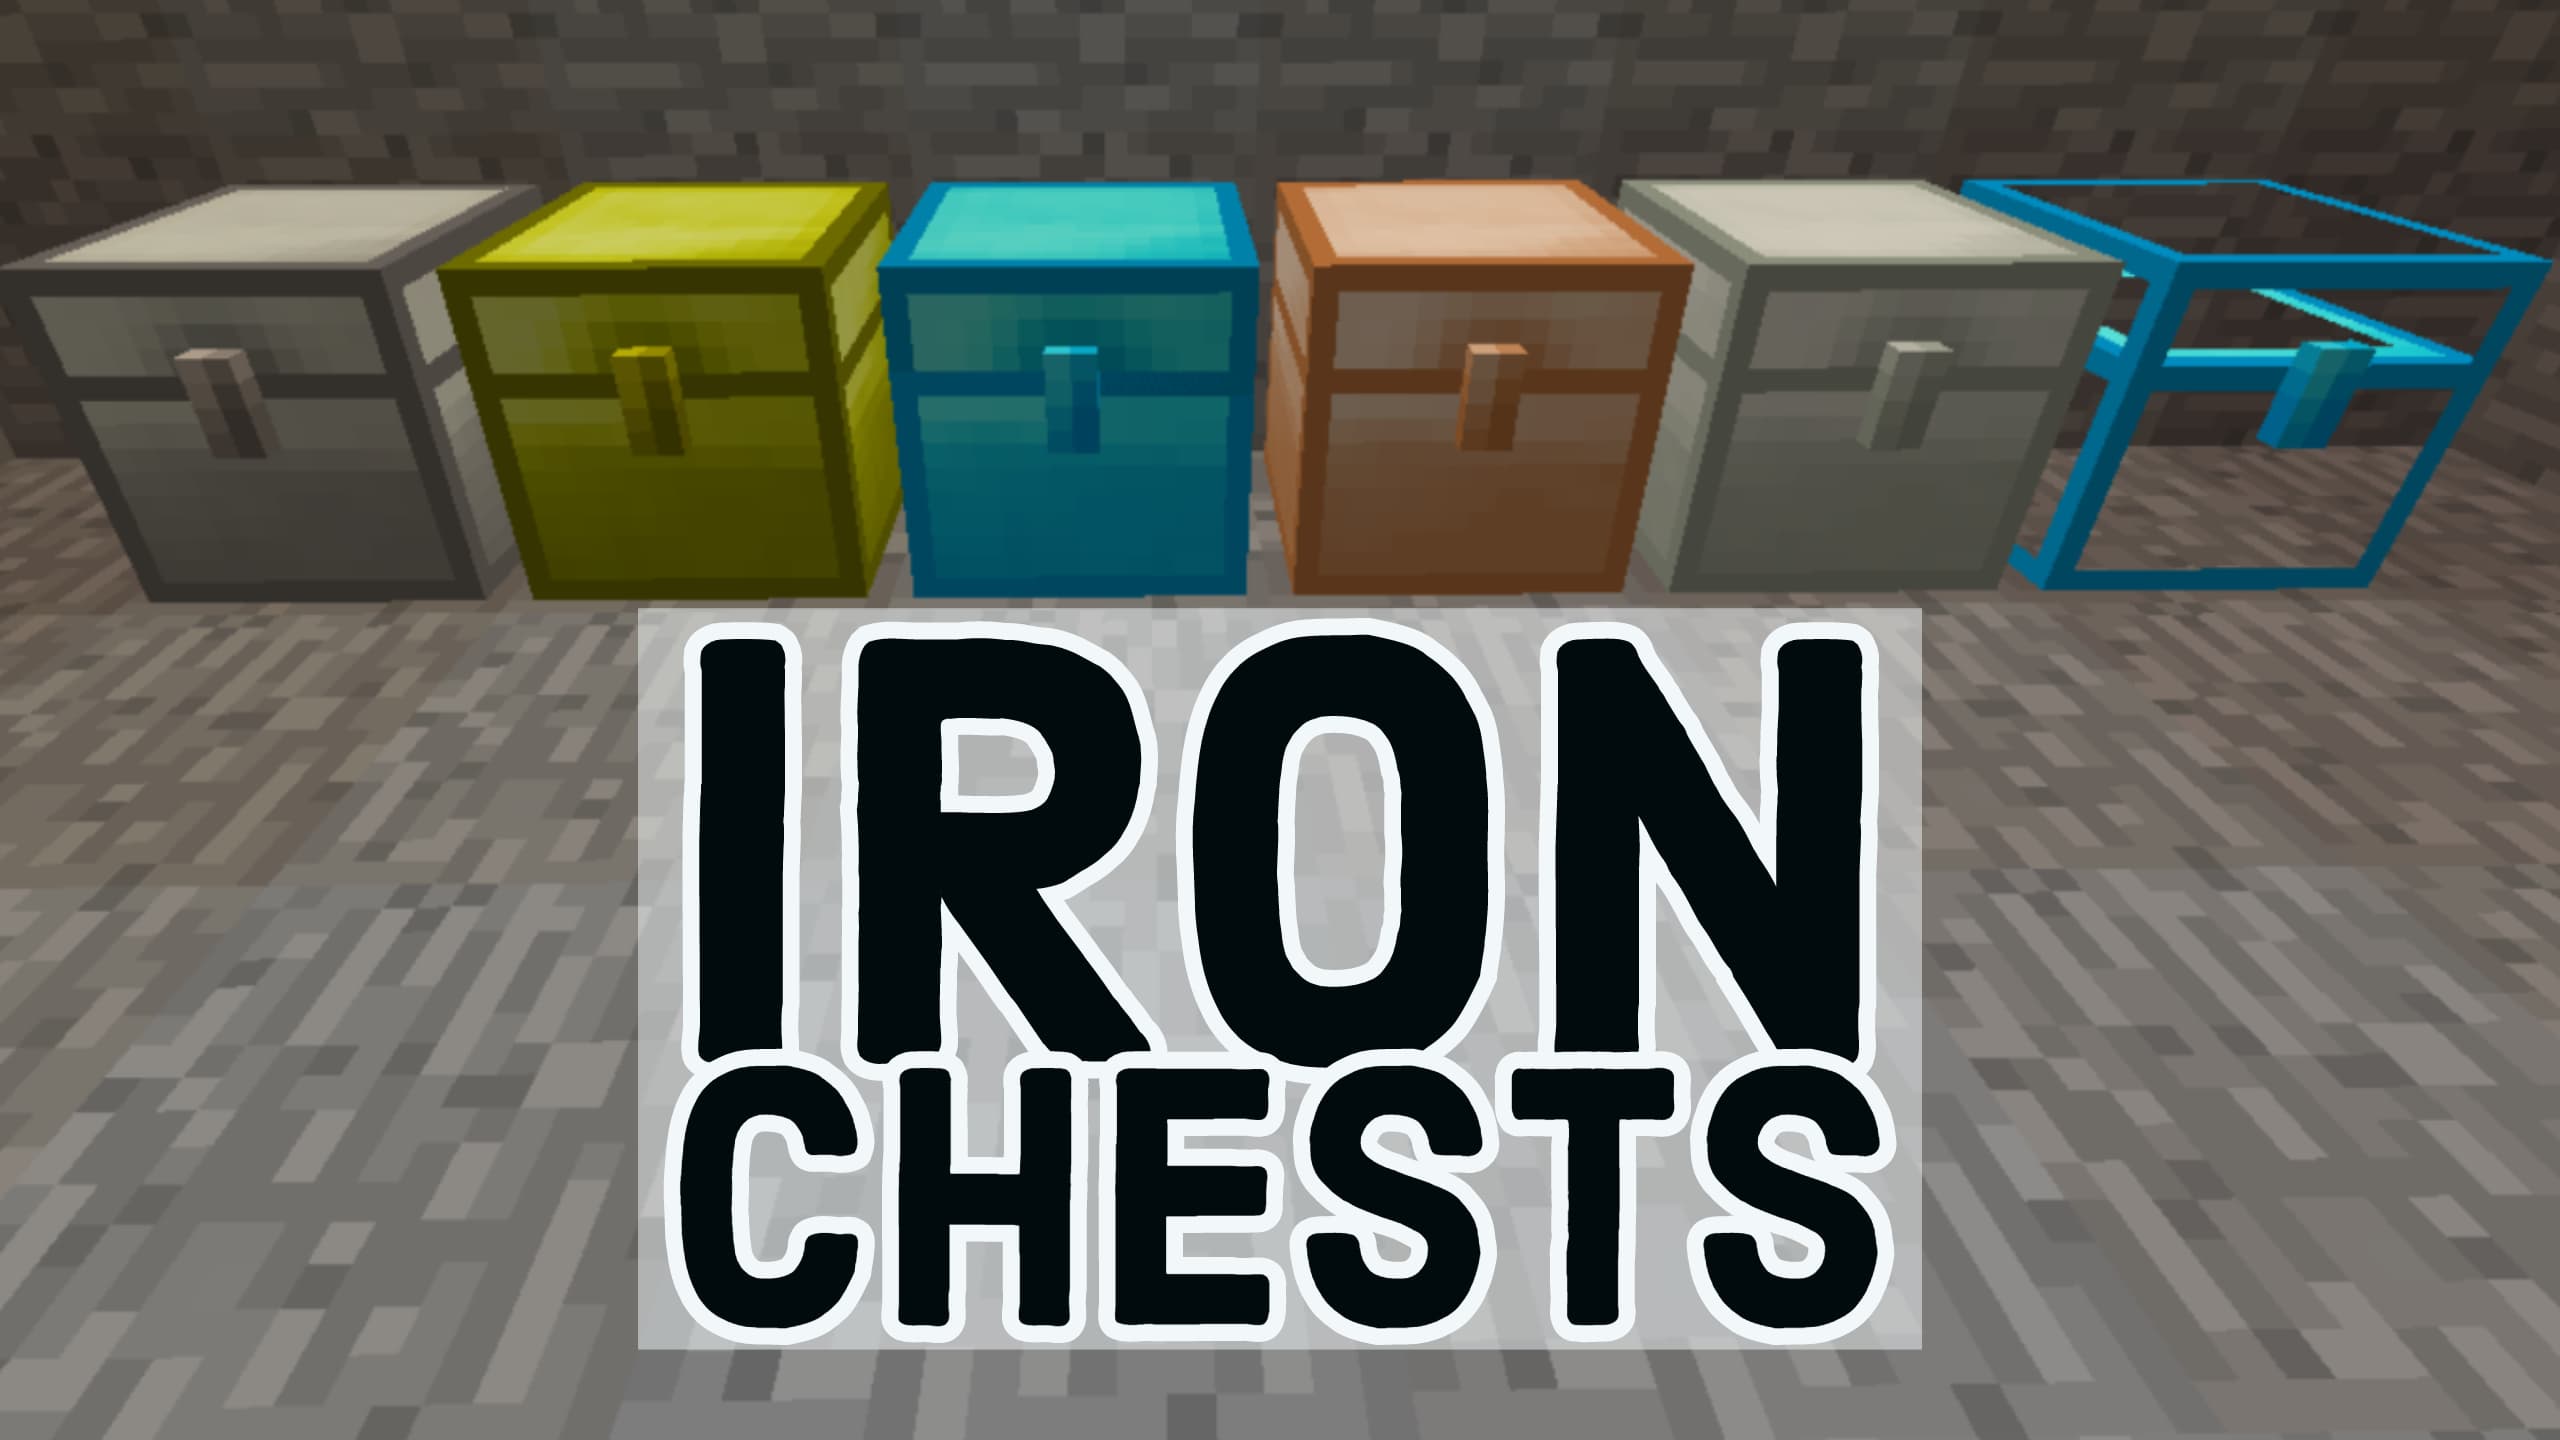 [Mod] Iron Chests - 1.7.10 → 1.19.2